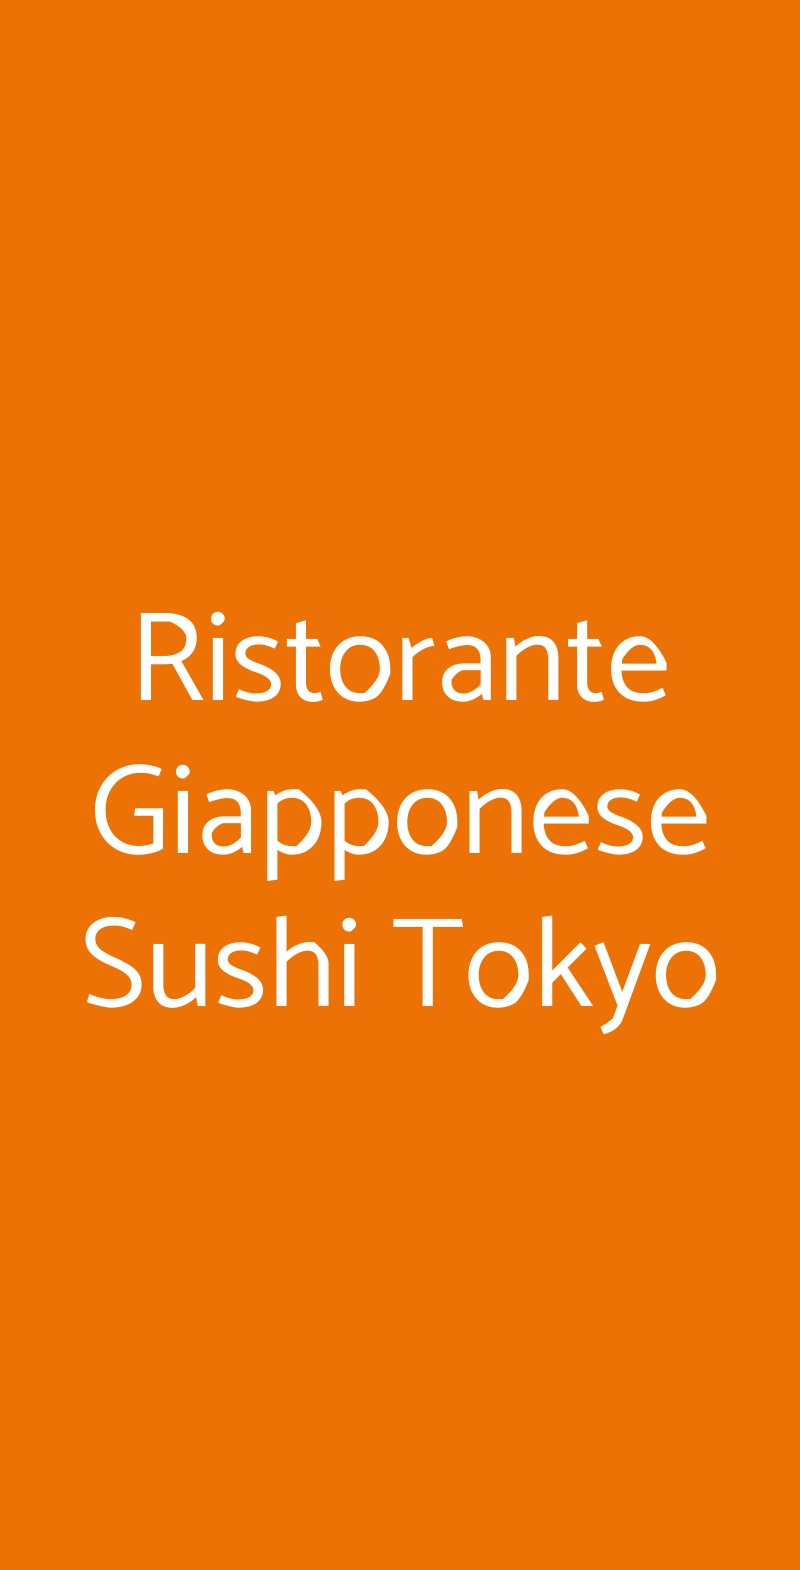 Ristorante Giapponese Sushi Tokyo Bologna menù 1 pagina